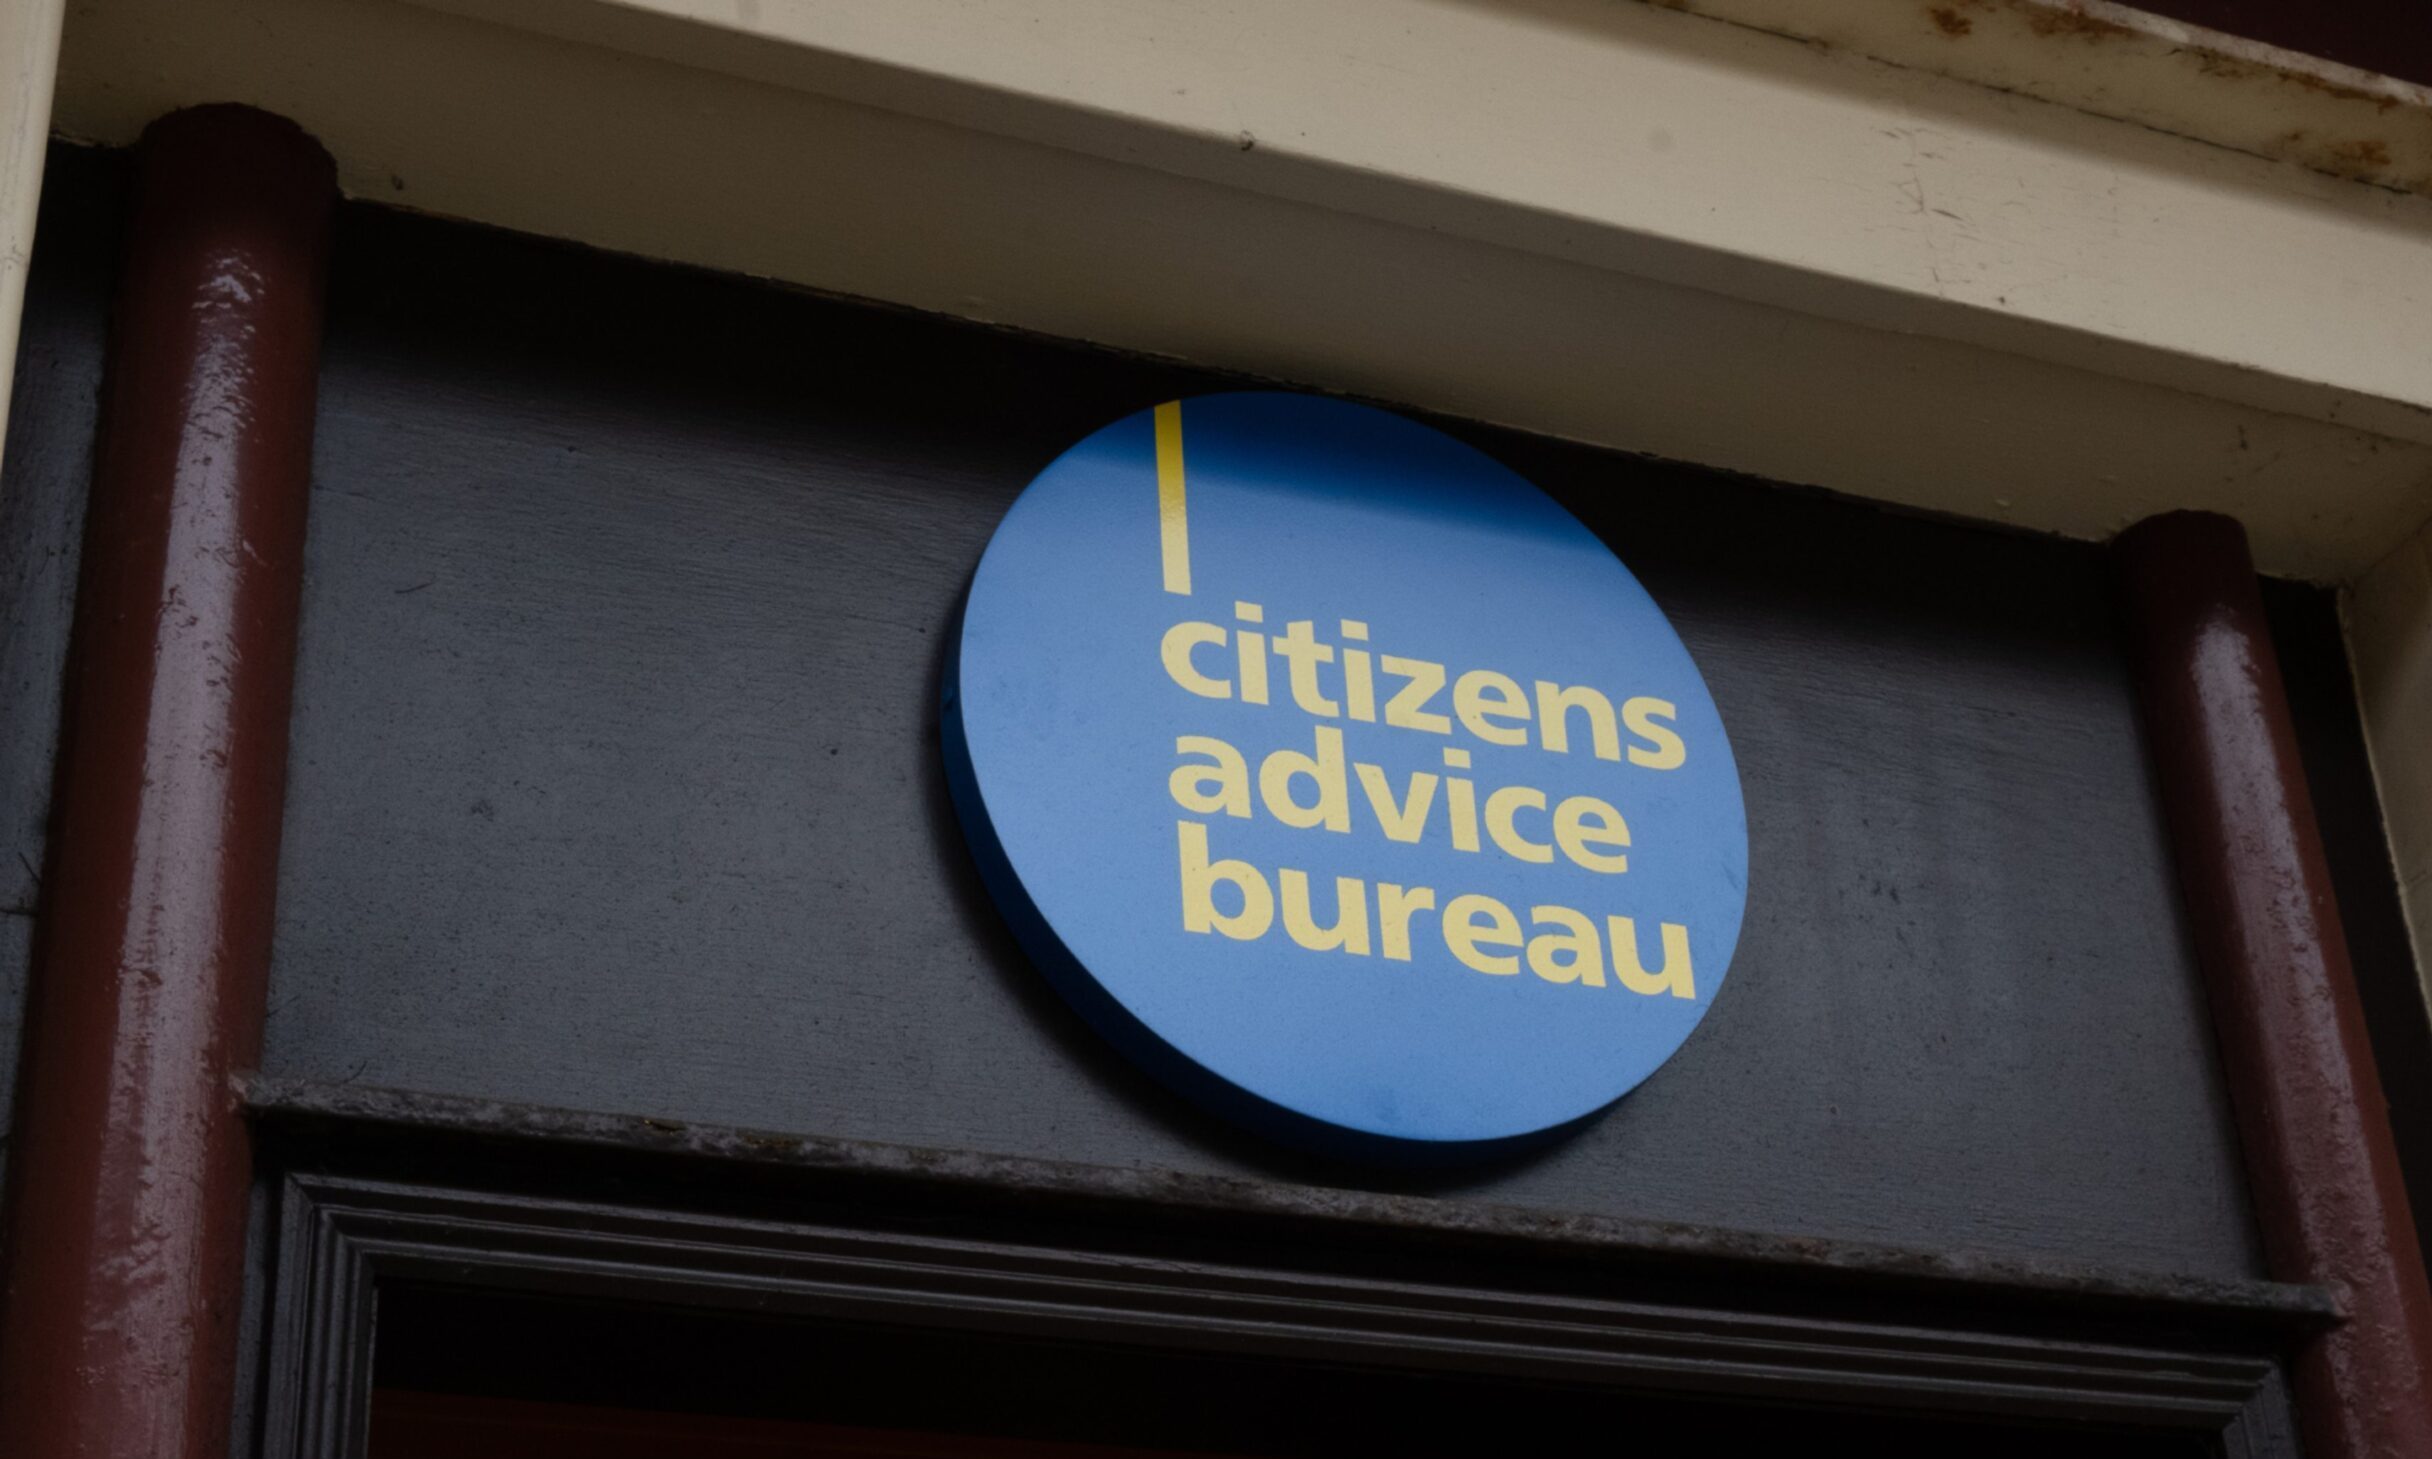 Citizens Advice Bureau sign above the door.